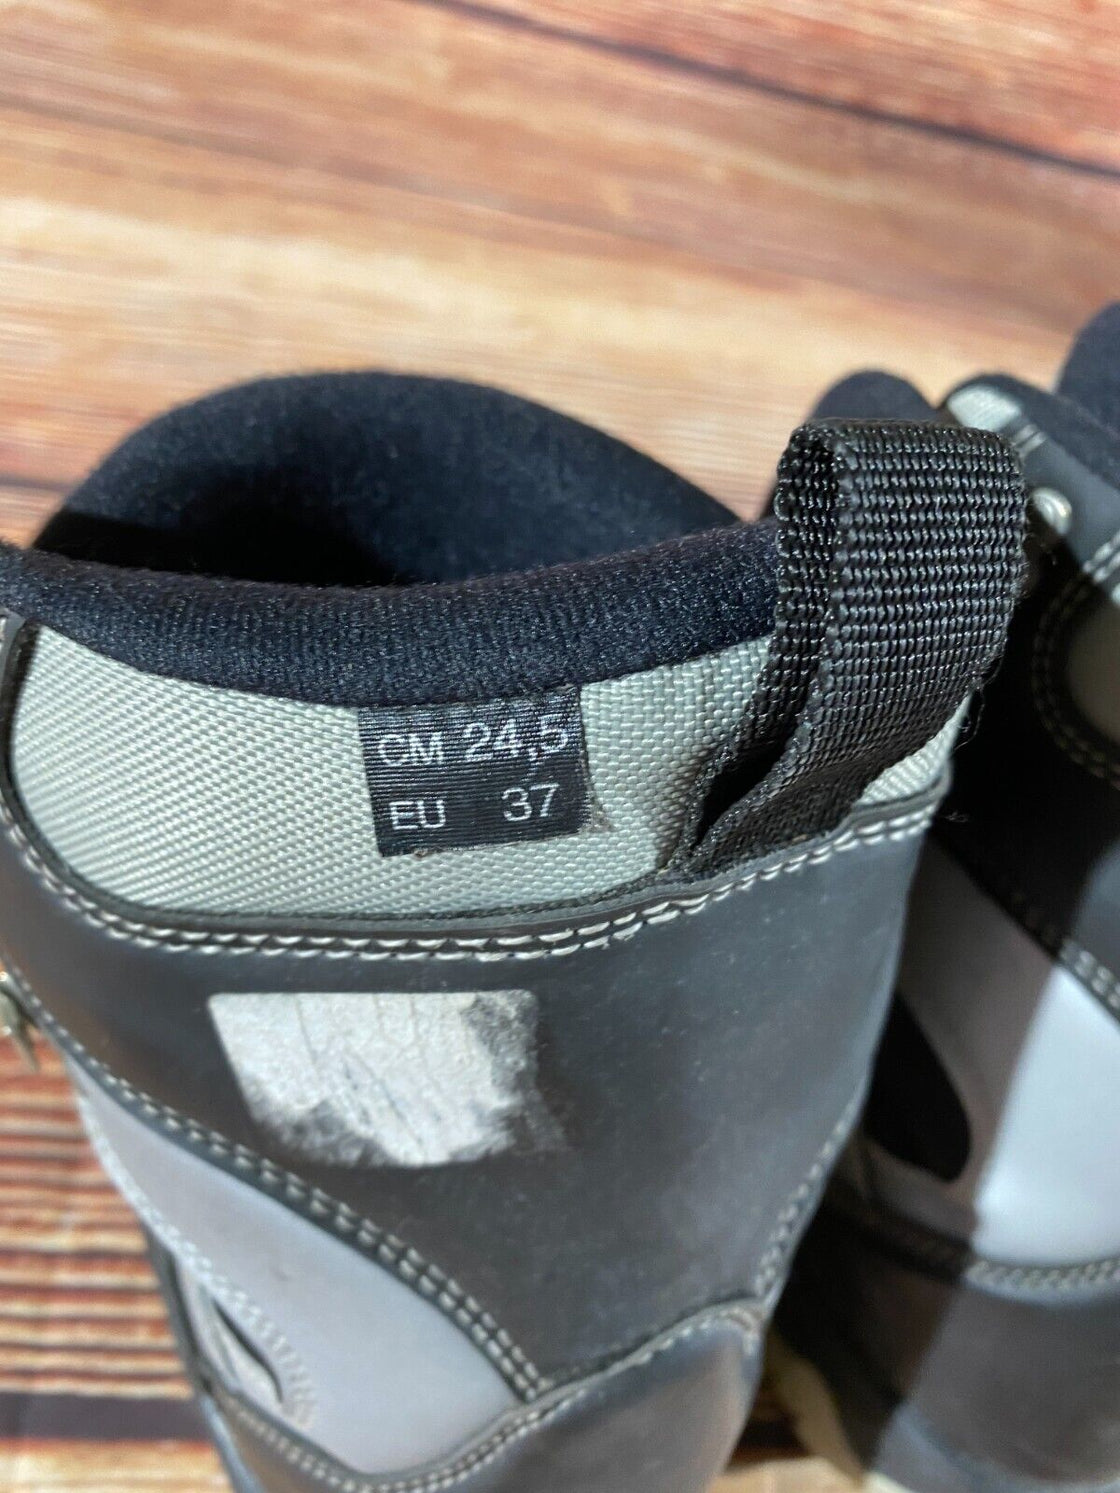 ESKEW Snowboard Boots Size EU37, US5, UK4 Mondo 238 mm